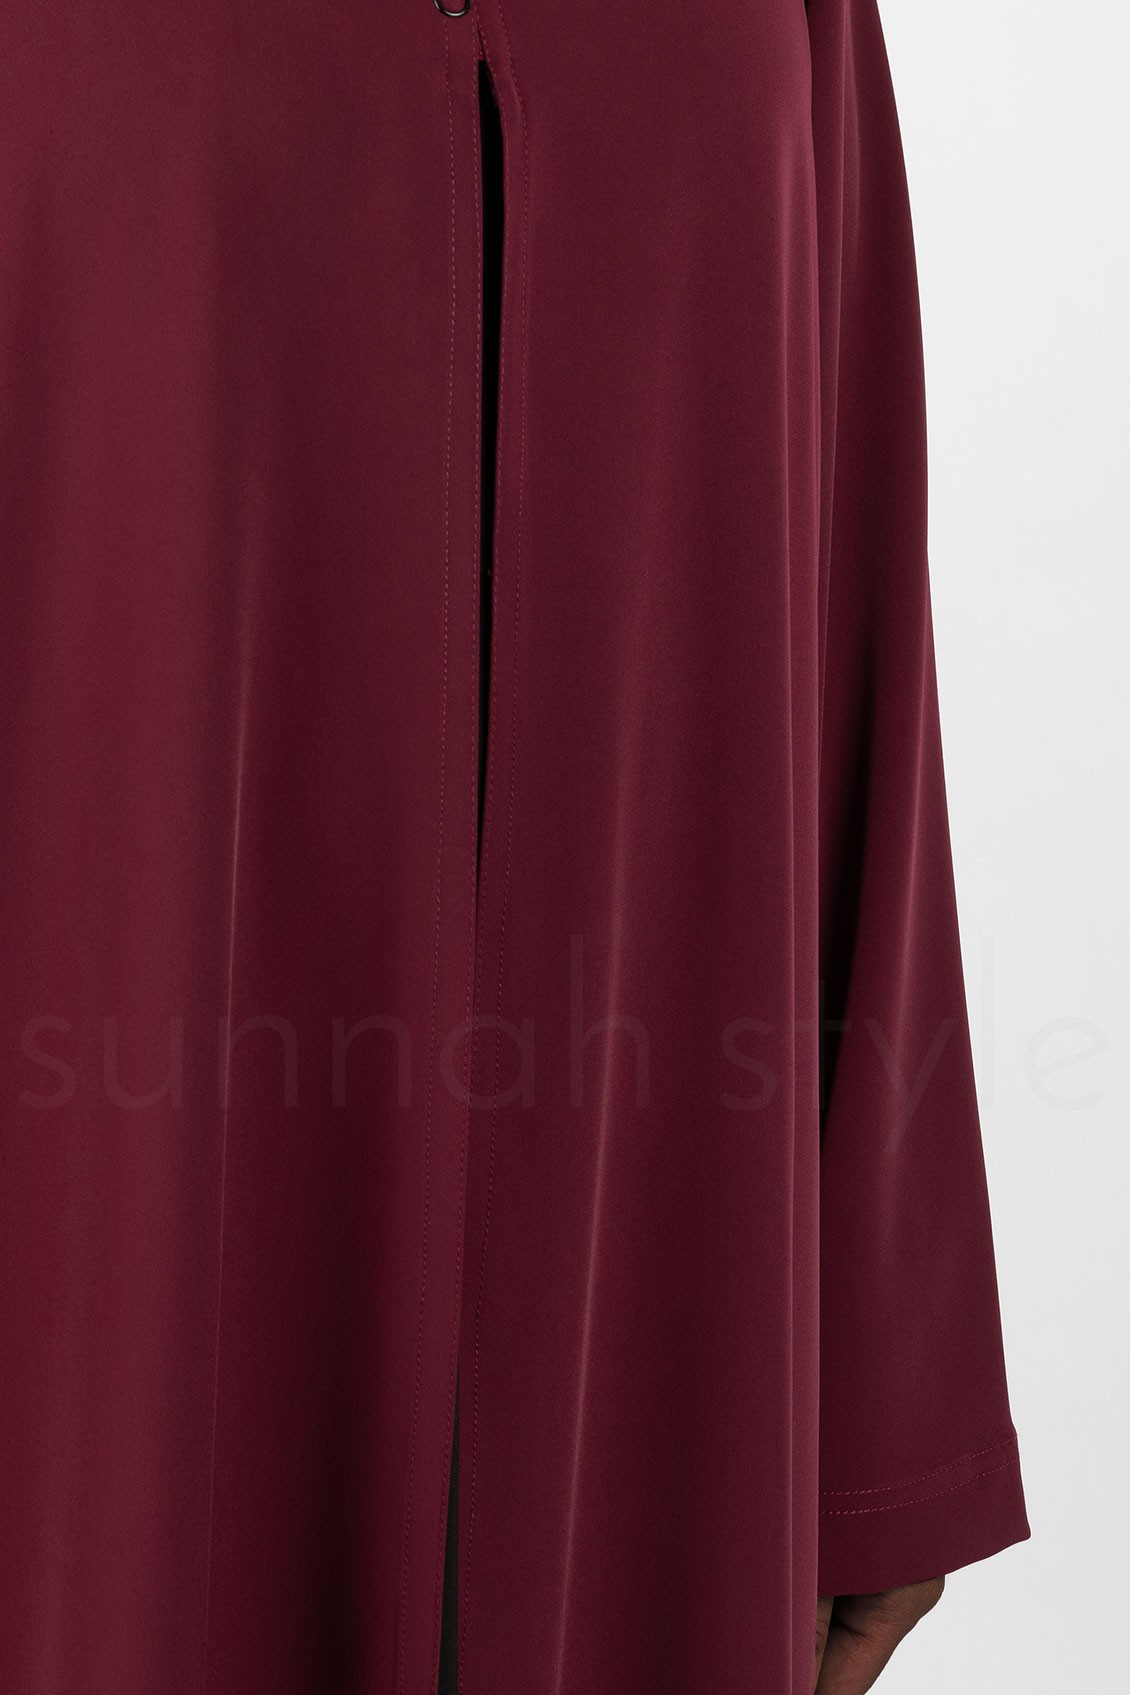 Sunnah Style Classic Robe Burgundy